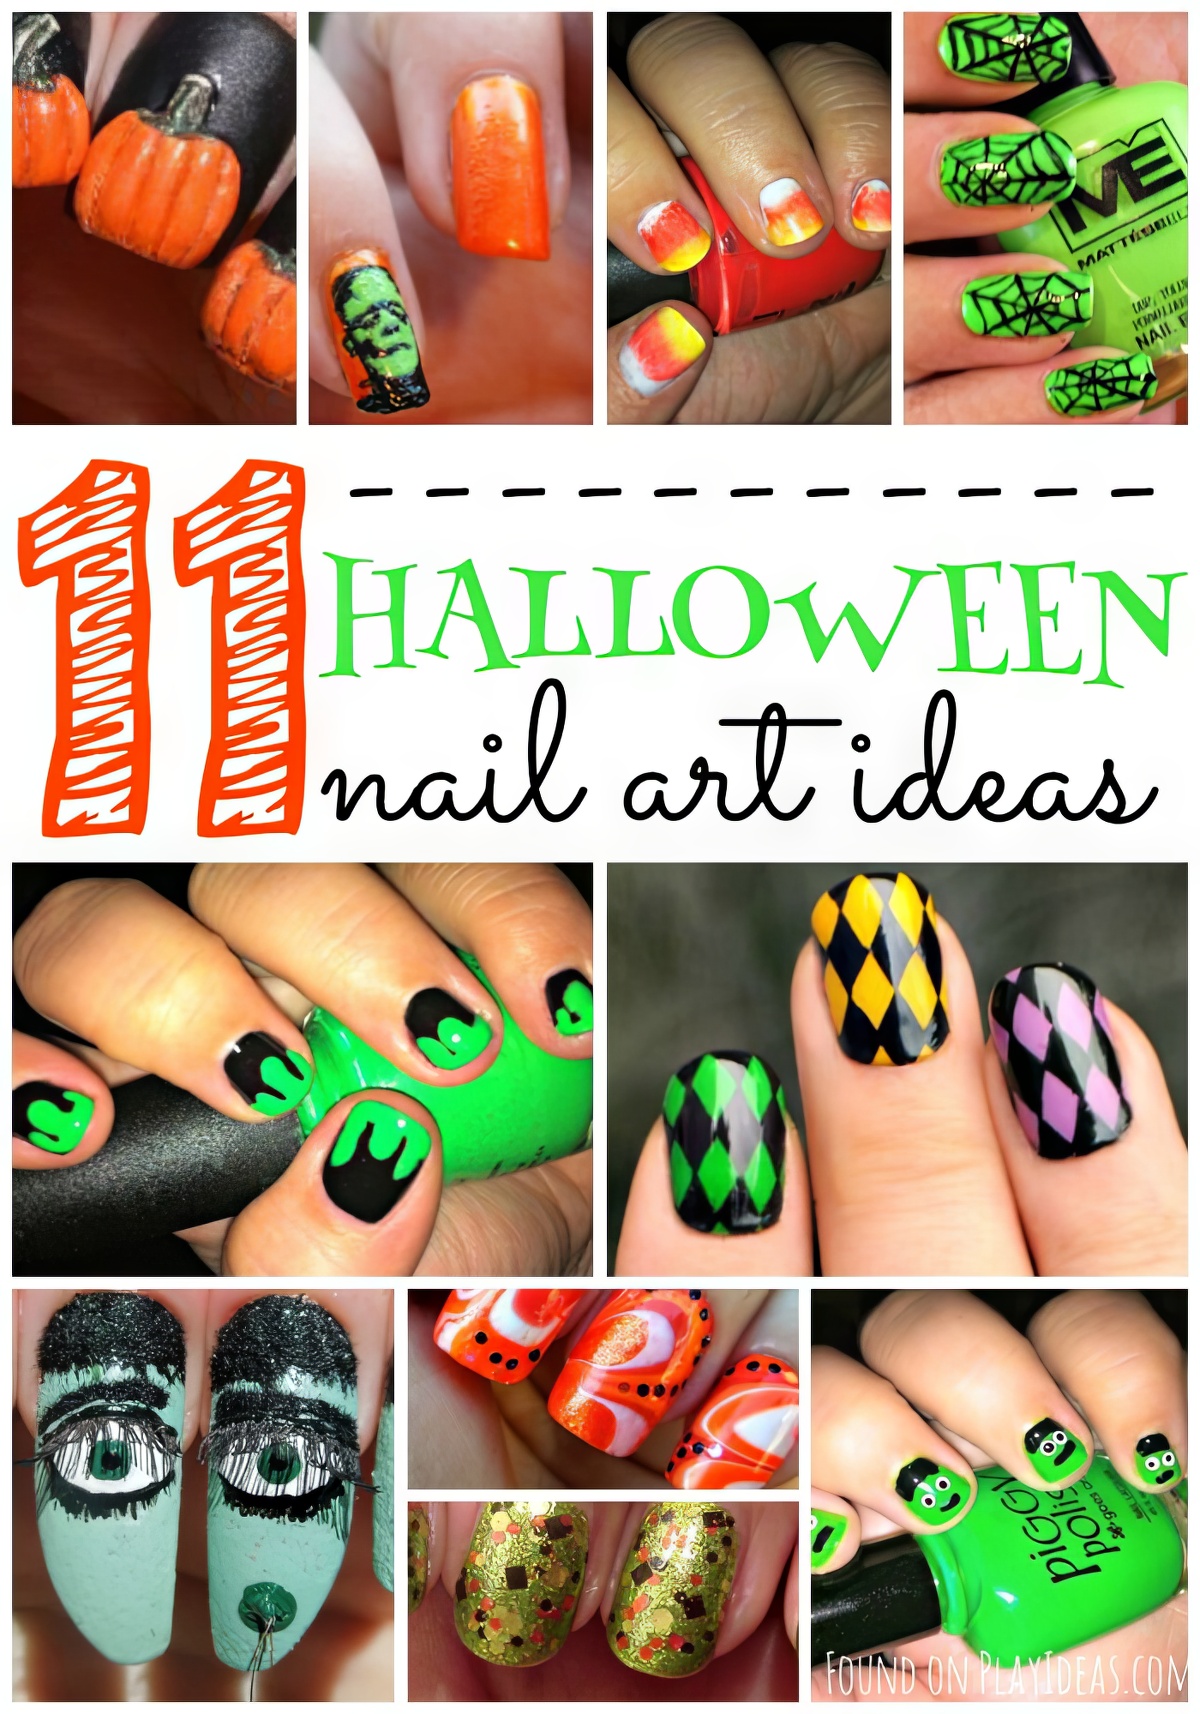 Halloween Nail Art ideas to do this Halloween!